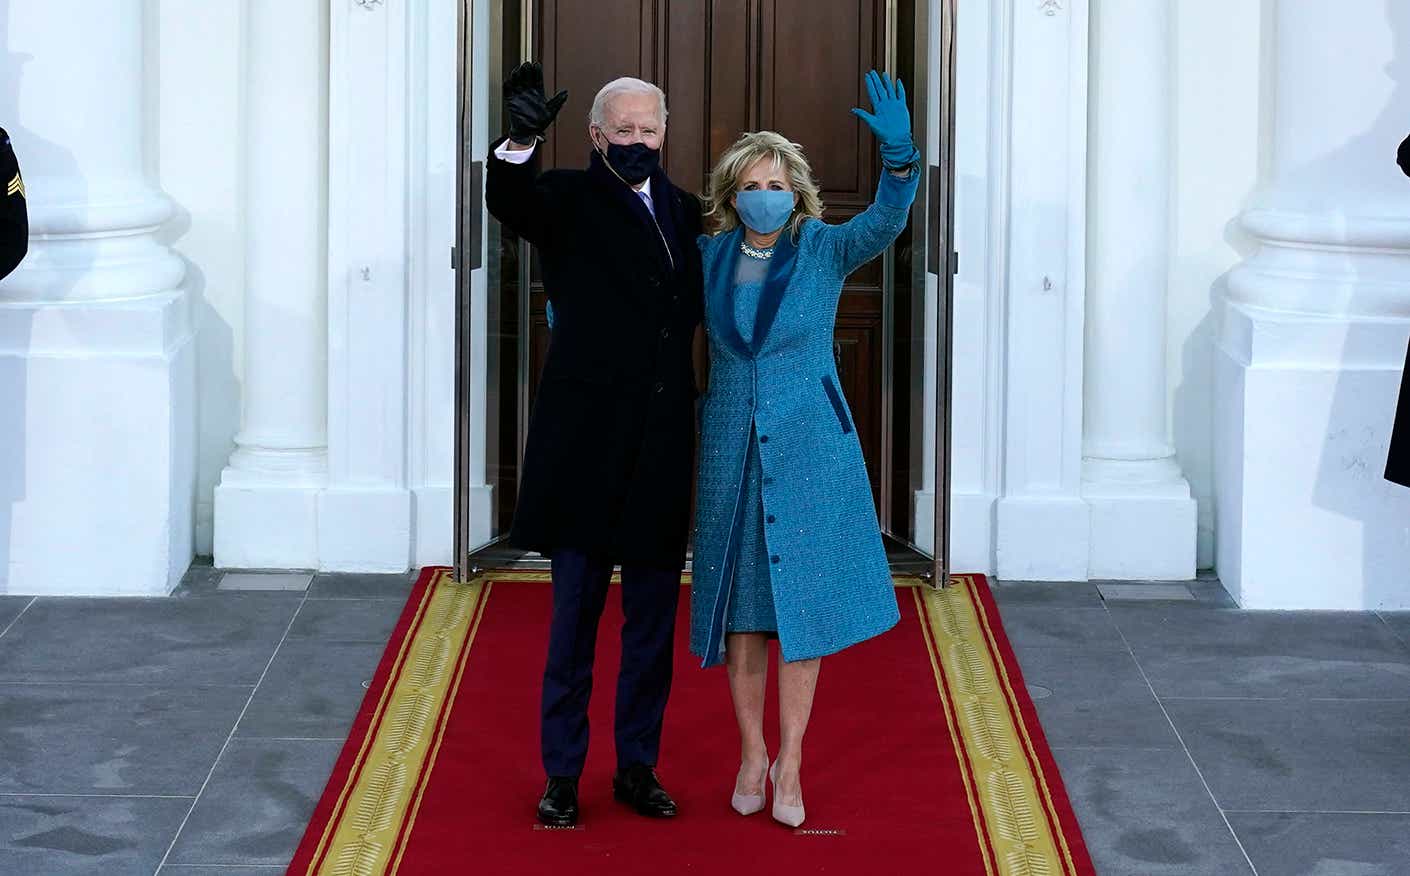 Joe Biden's Inauguration As 46th President Of The U.S.